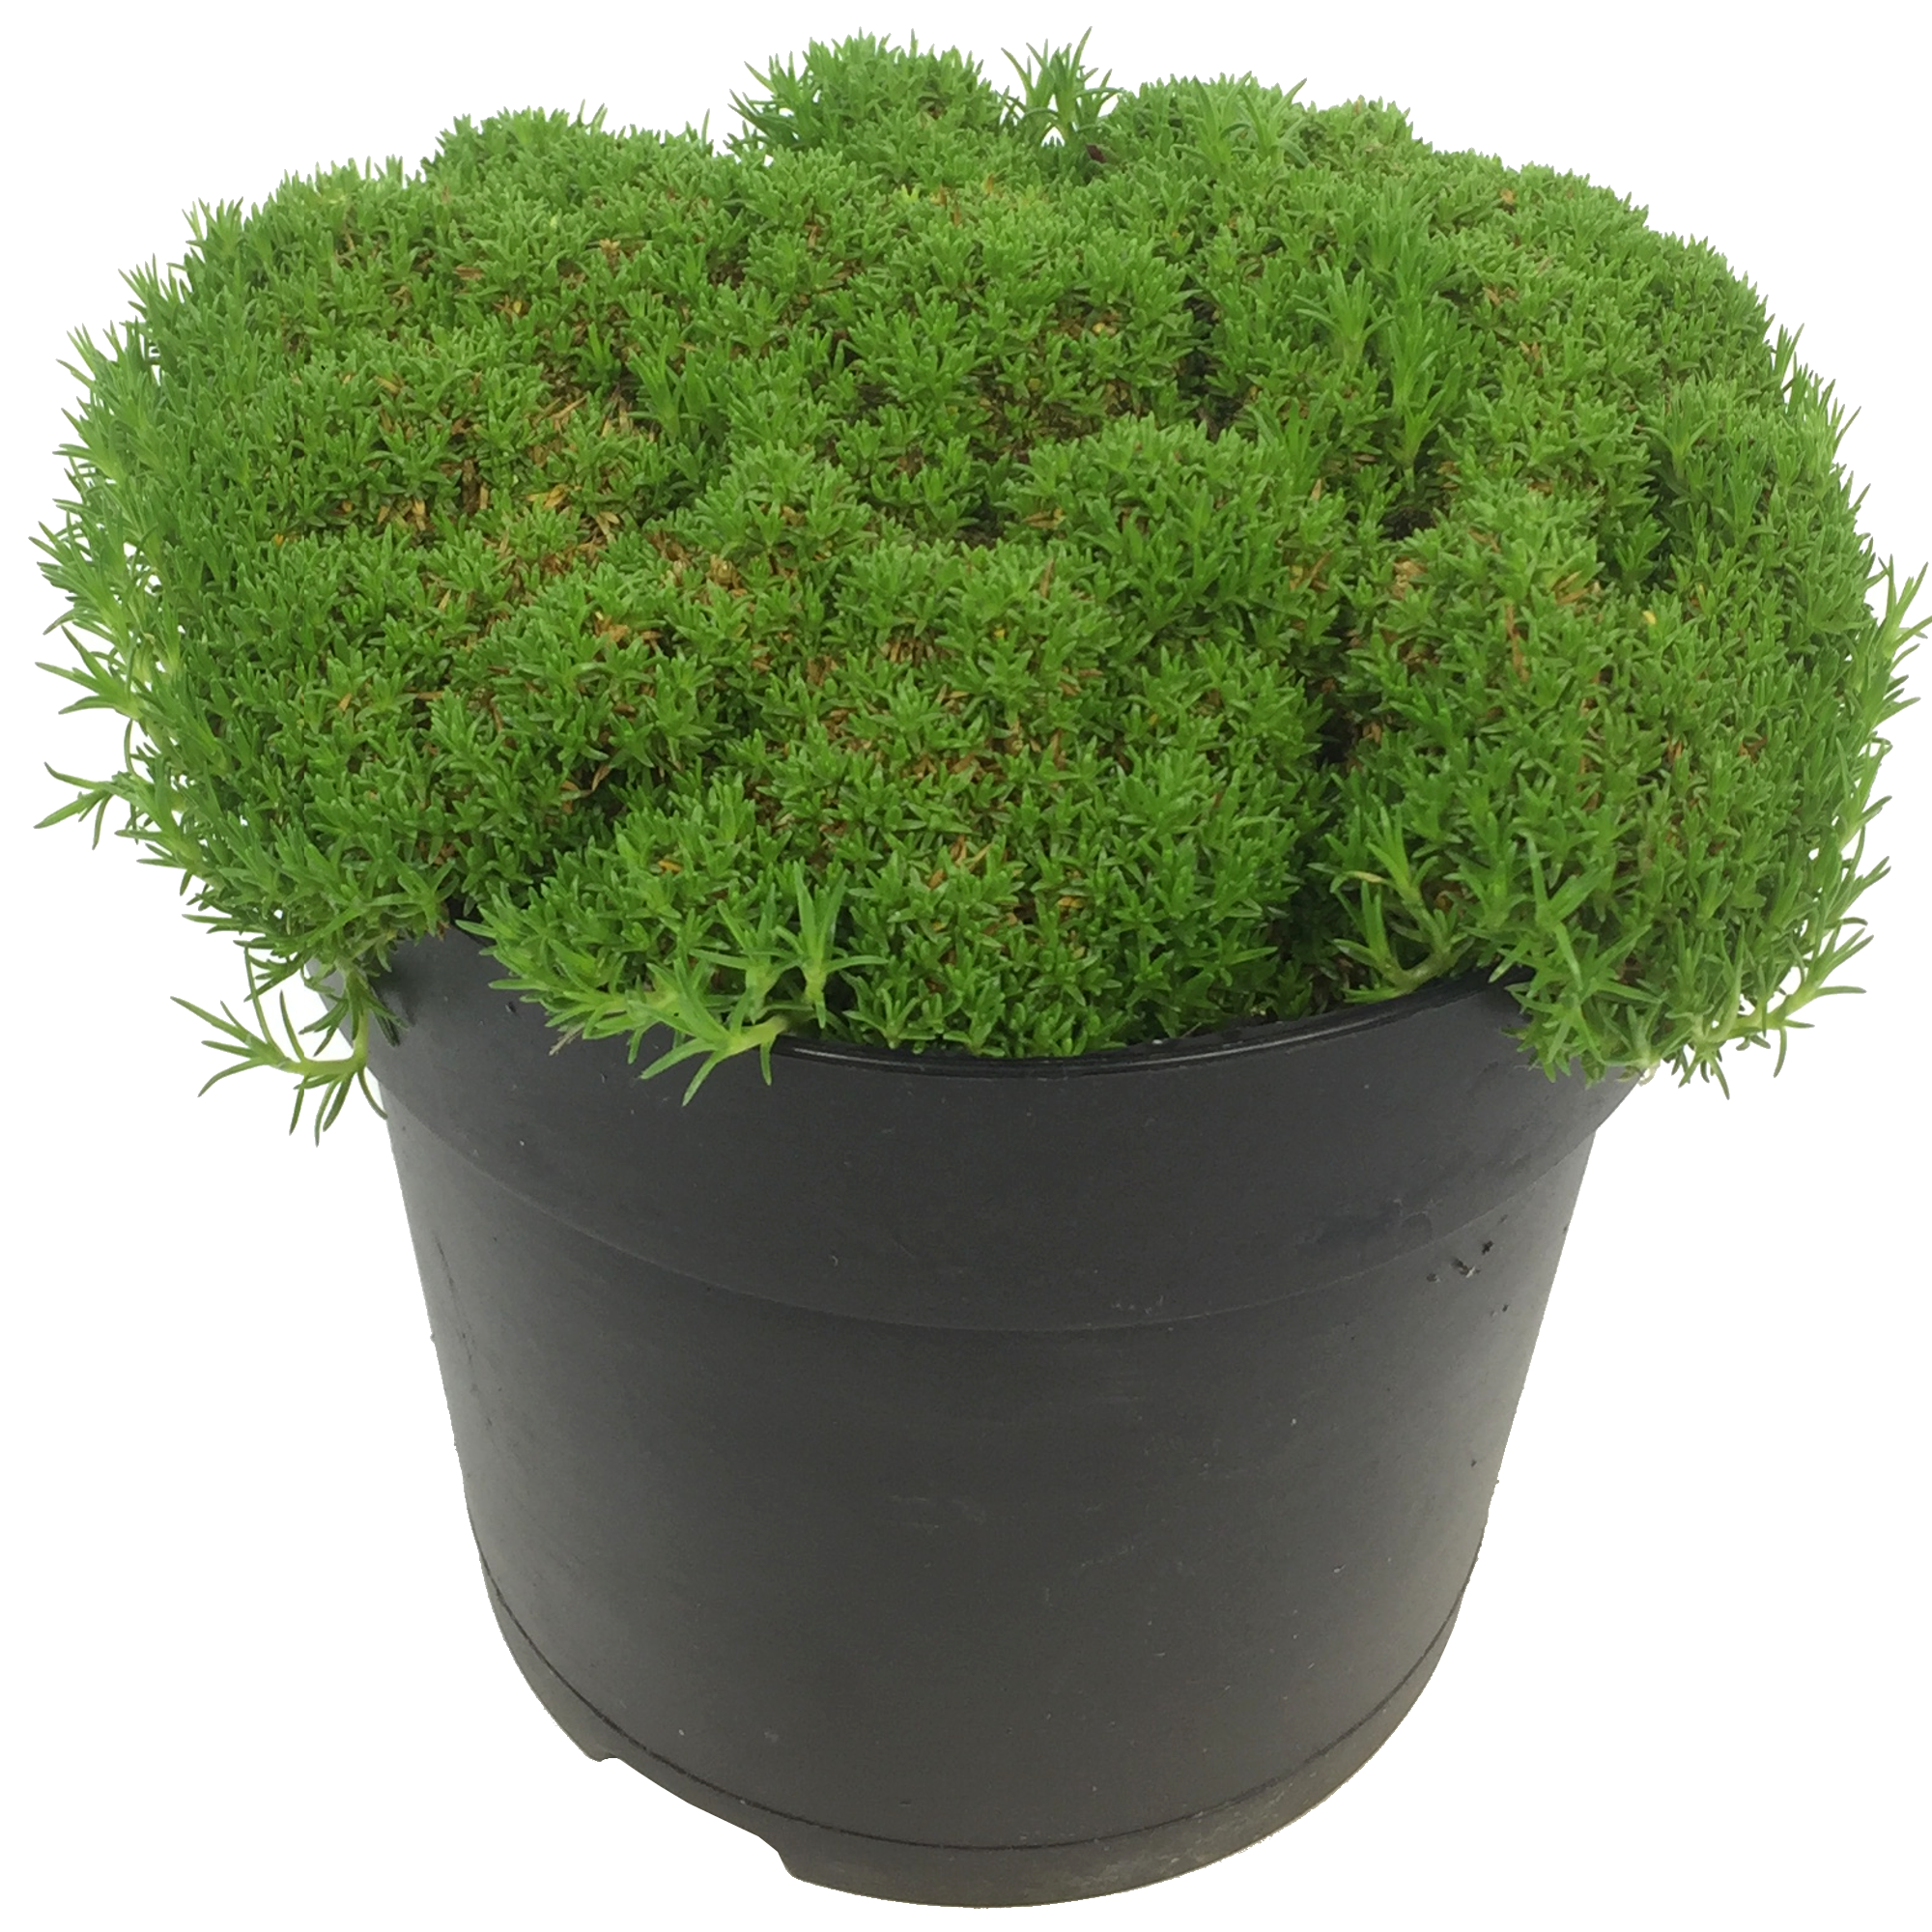 Knäuelkraut Match & Moss 'Pine Green®' 13 cm Topf + product picture